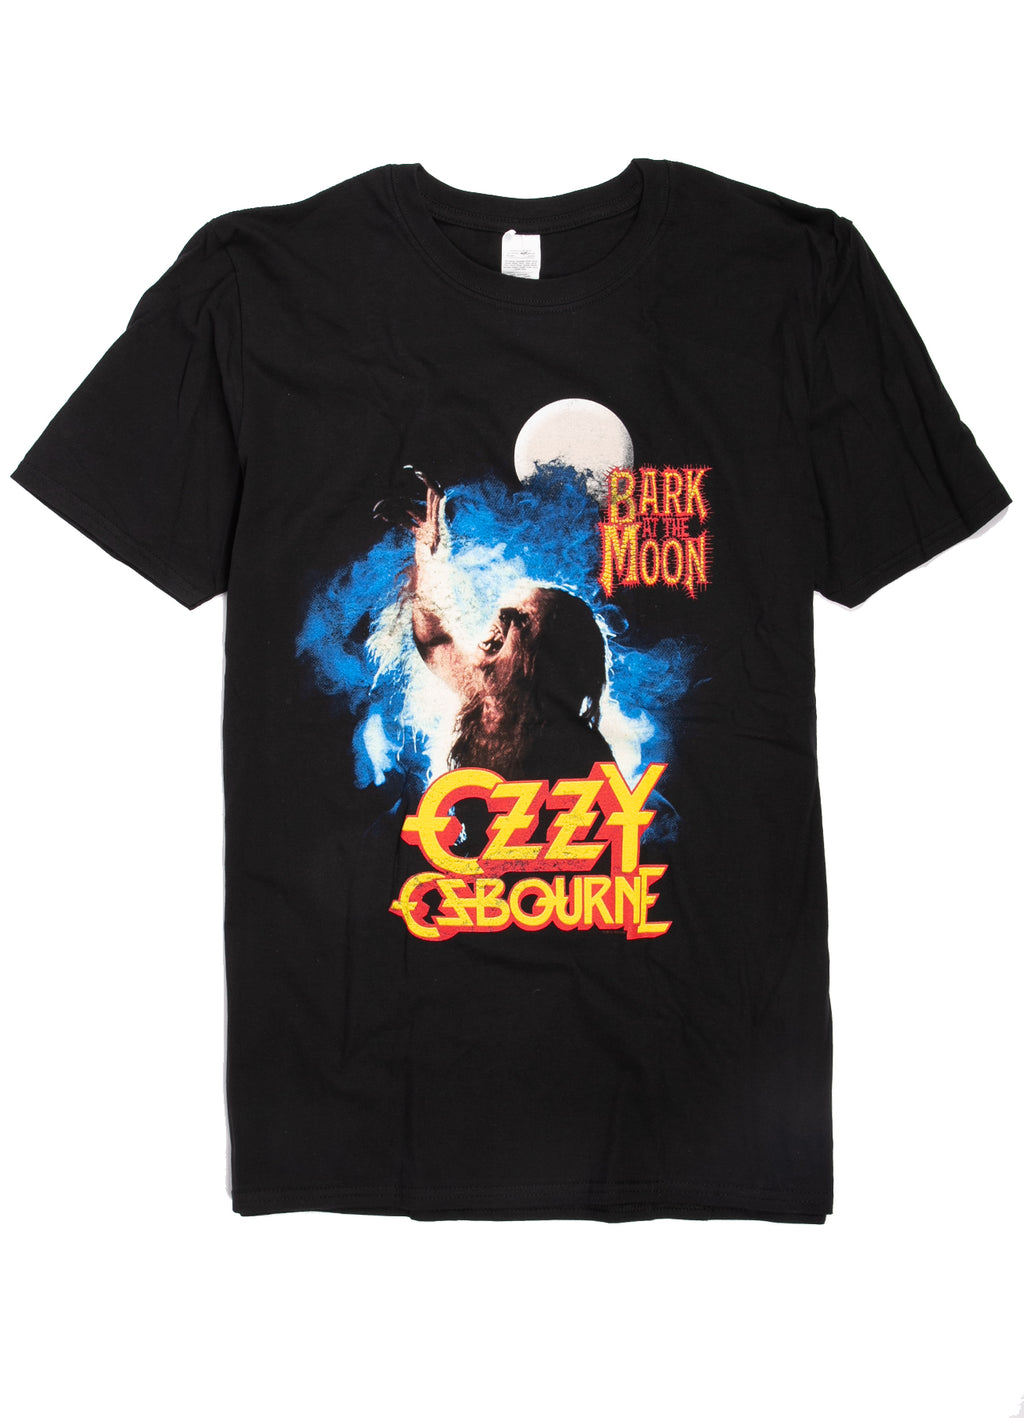 Ozzy Osbourne "Bark At The Moon" t-shirt.